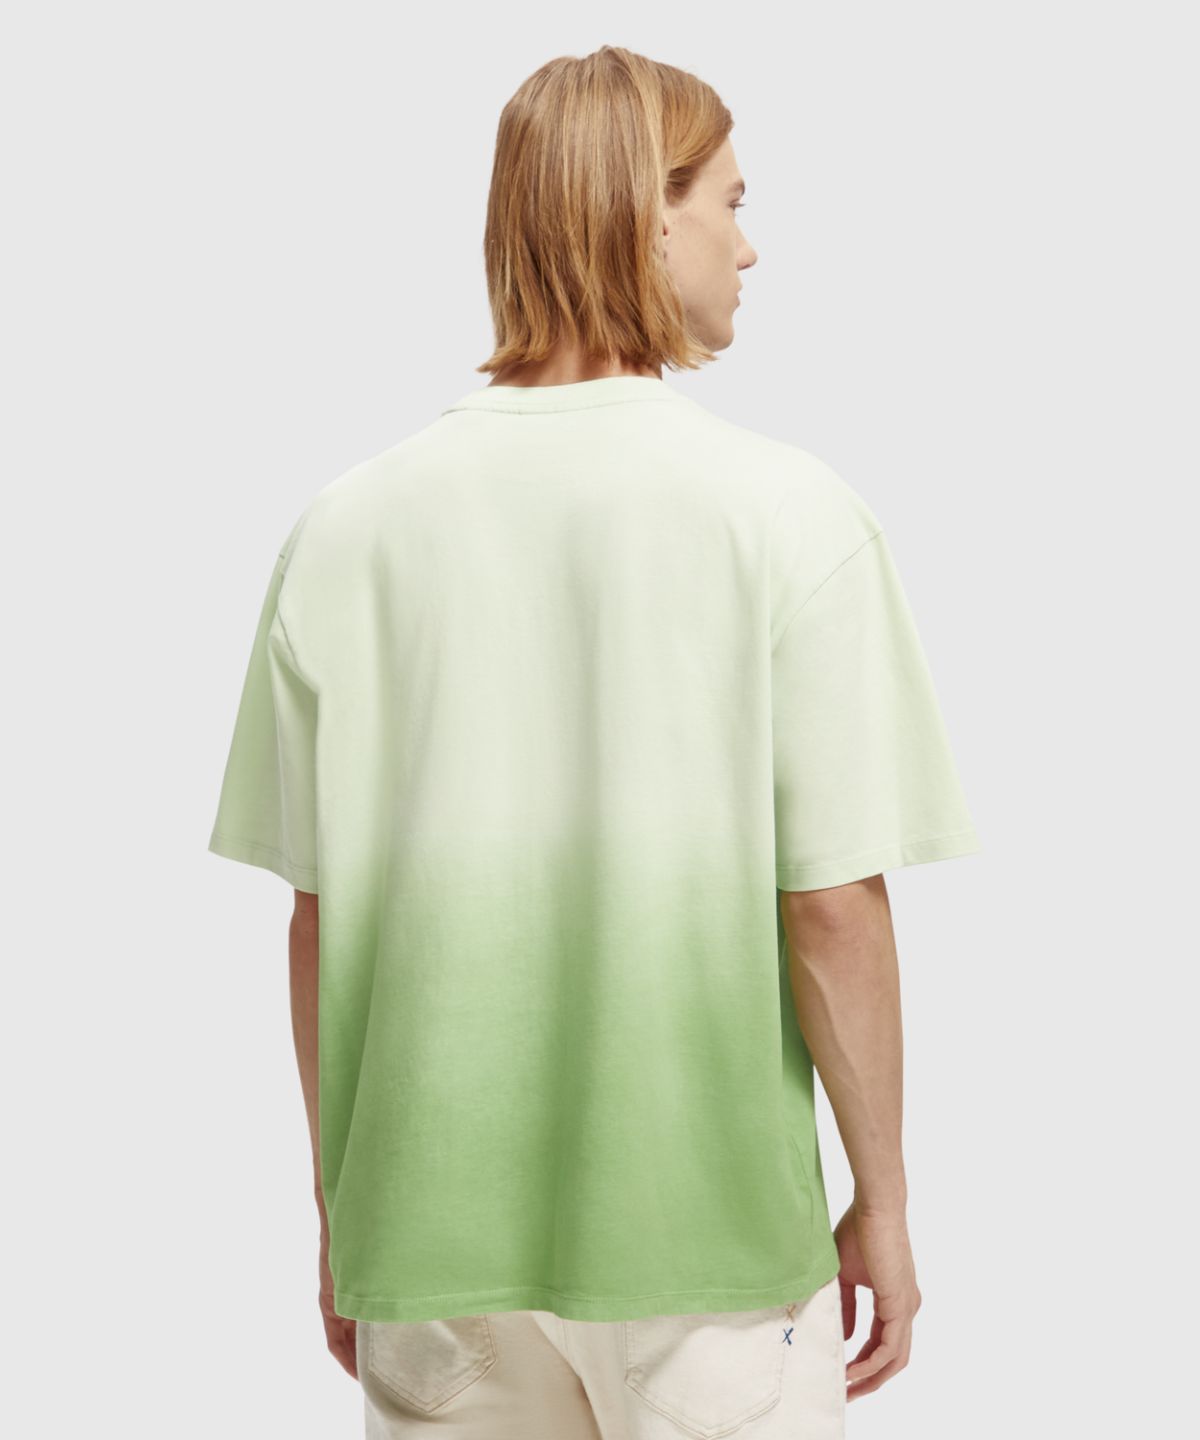 Bugs Bunny – Dip-dye short sleeved printed T-shirt